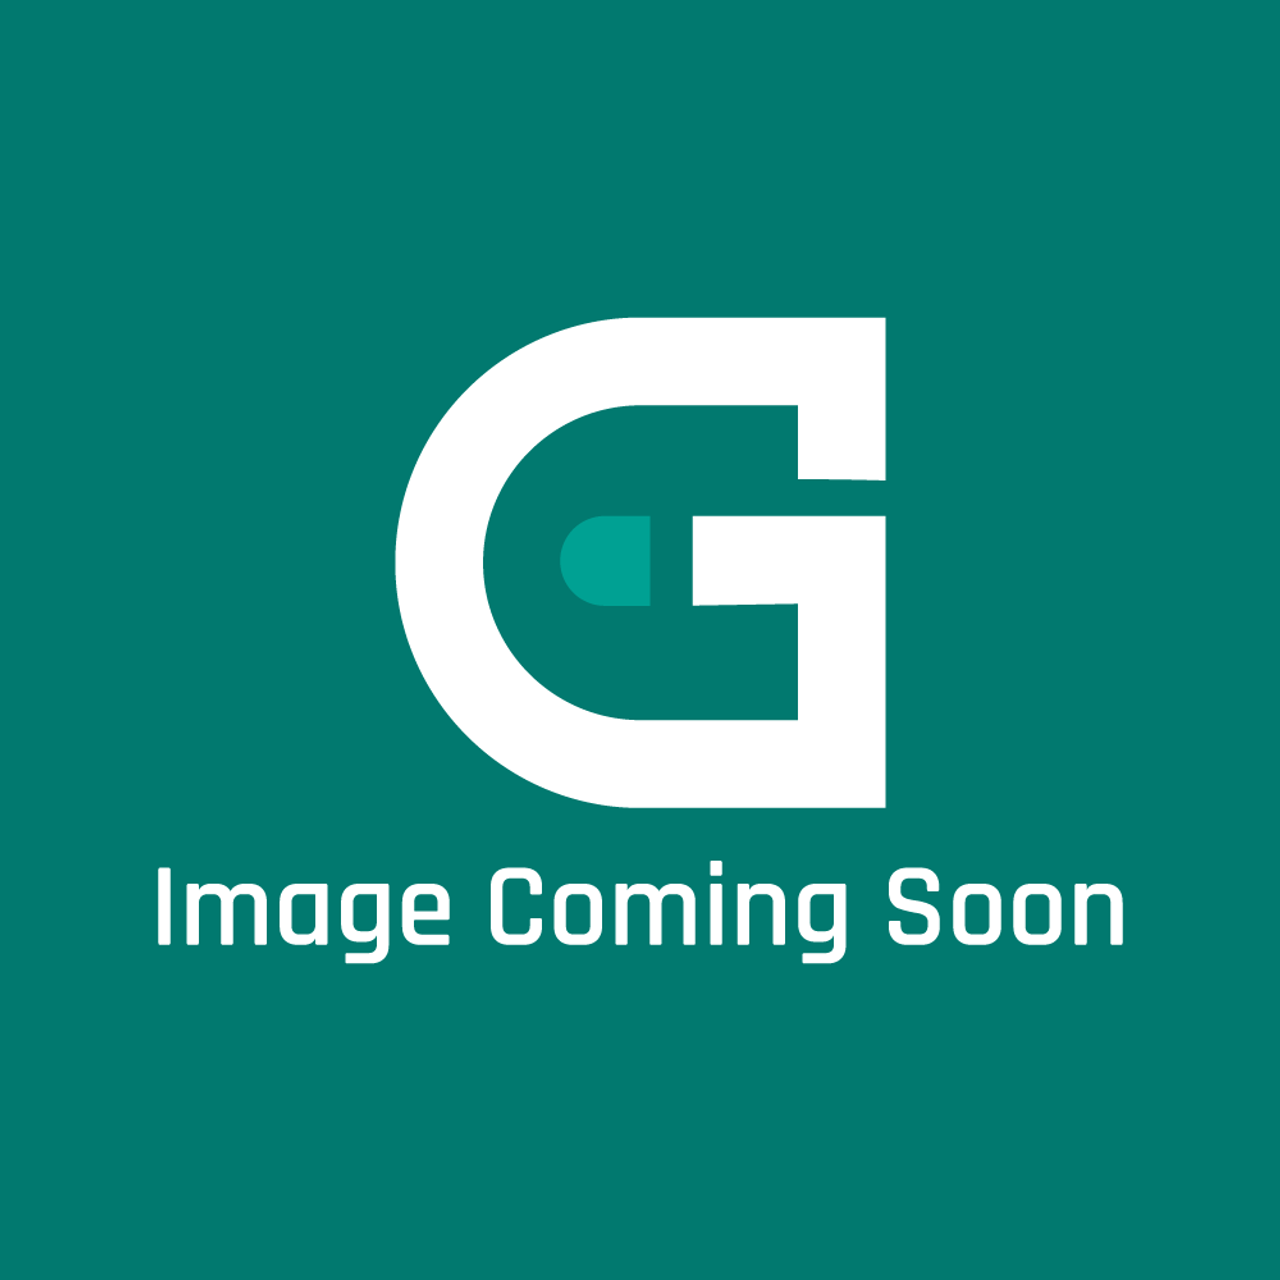 Viking PG010470 - CARTON - PORTABLE GRIDDLE - Image Coming Soon!